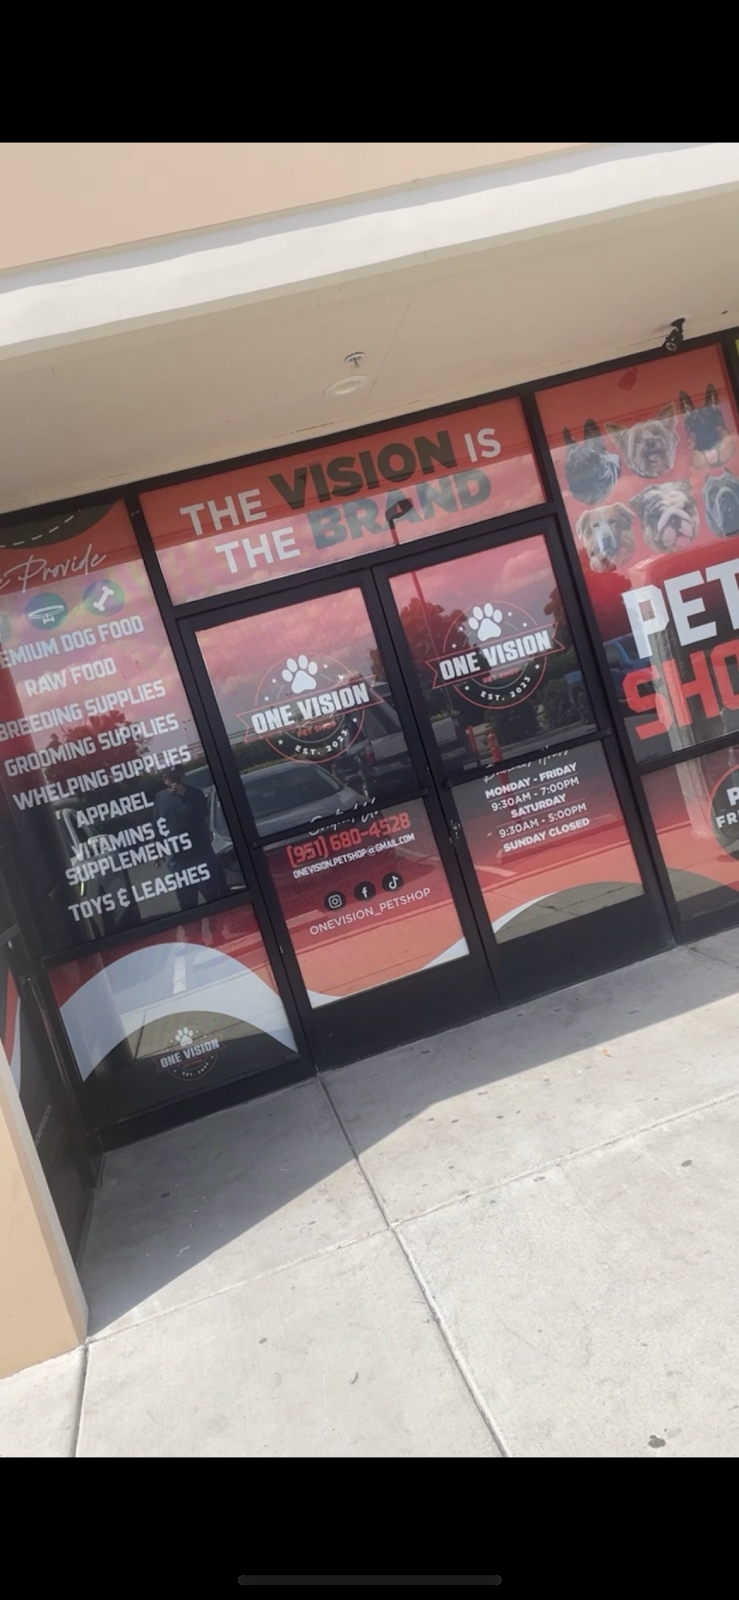 One Vision Pet Shop | 130 W Walnut Ave A3, Perris, CA 92571, USA | Phone: (951) 680-4528